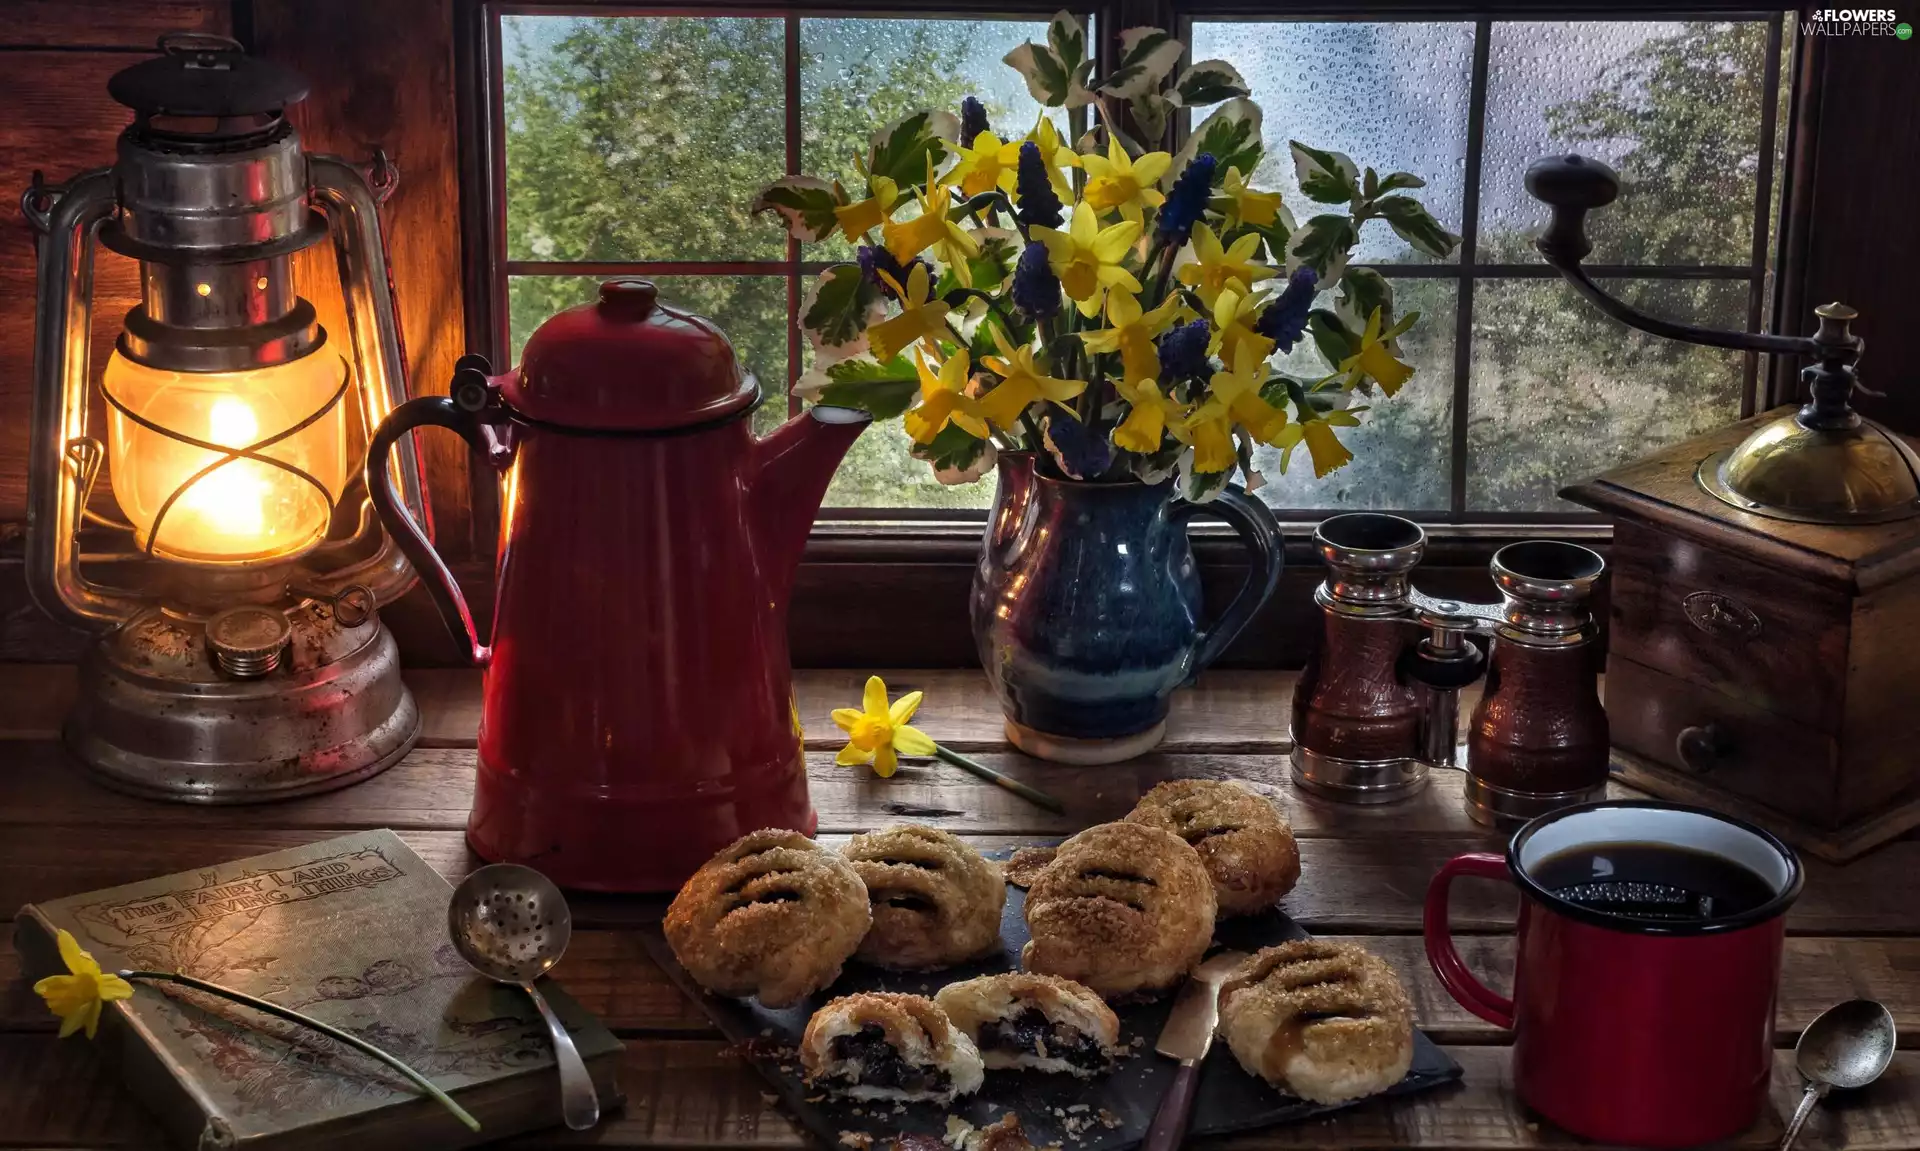 cookies, Book, coffee, jug, Vase, mill, binoculars, composition, Window, Oil Lamp, Daffodils, bouquet